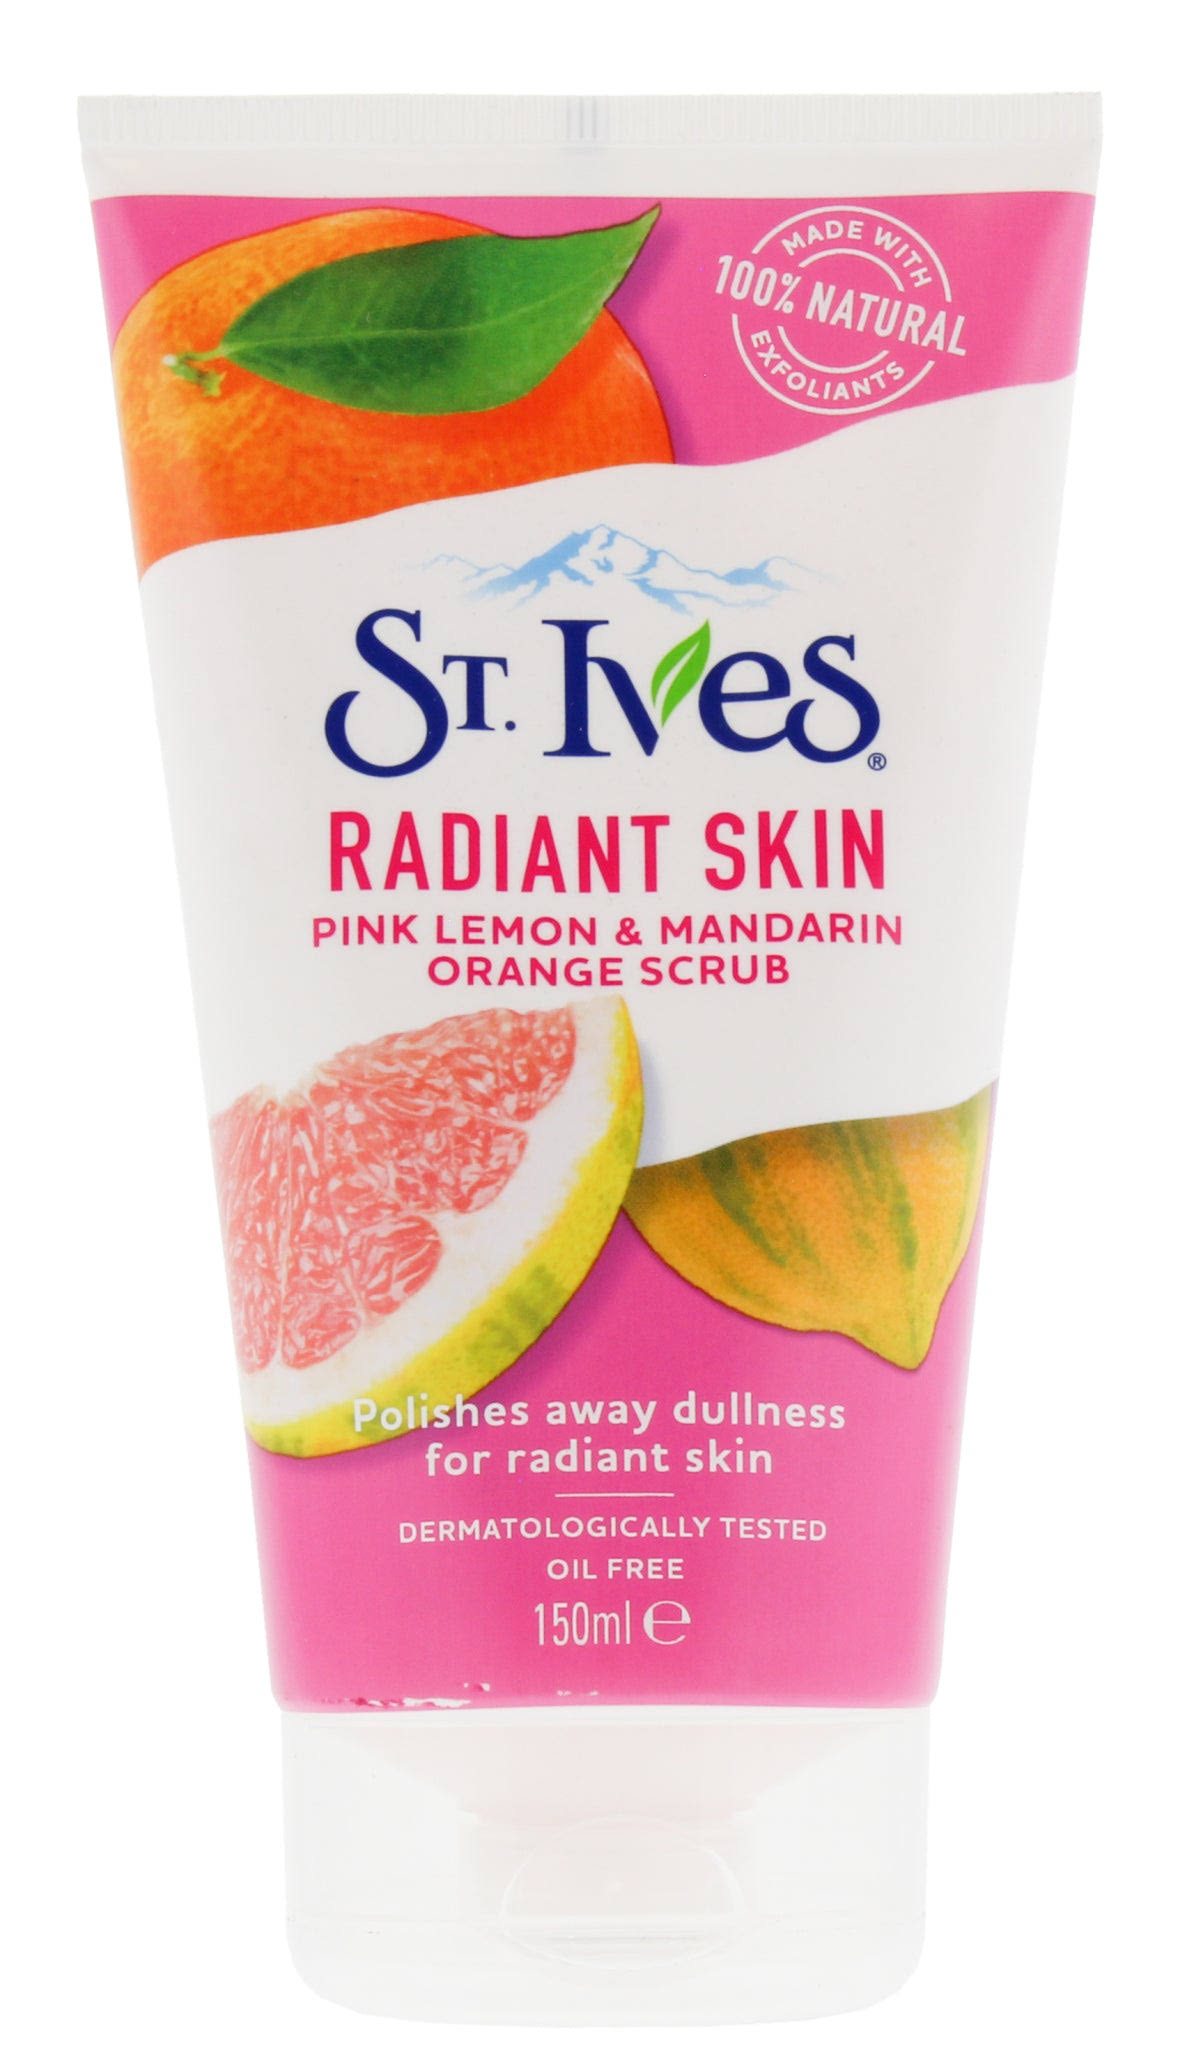 St. Ives Even & Bright Face Scrub - Pink Lemon & Mandarin Orange, 150ml